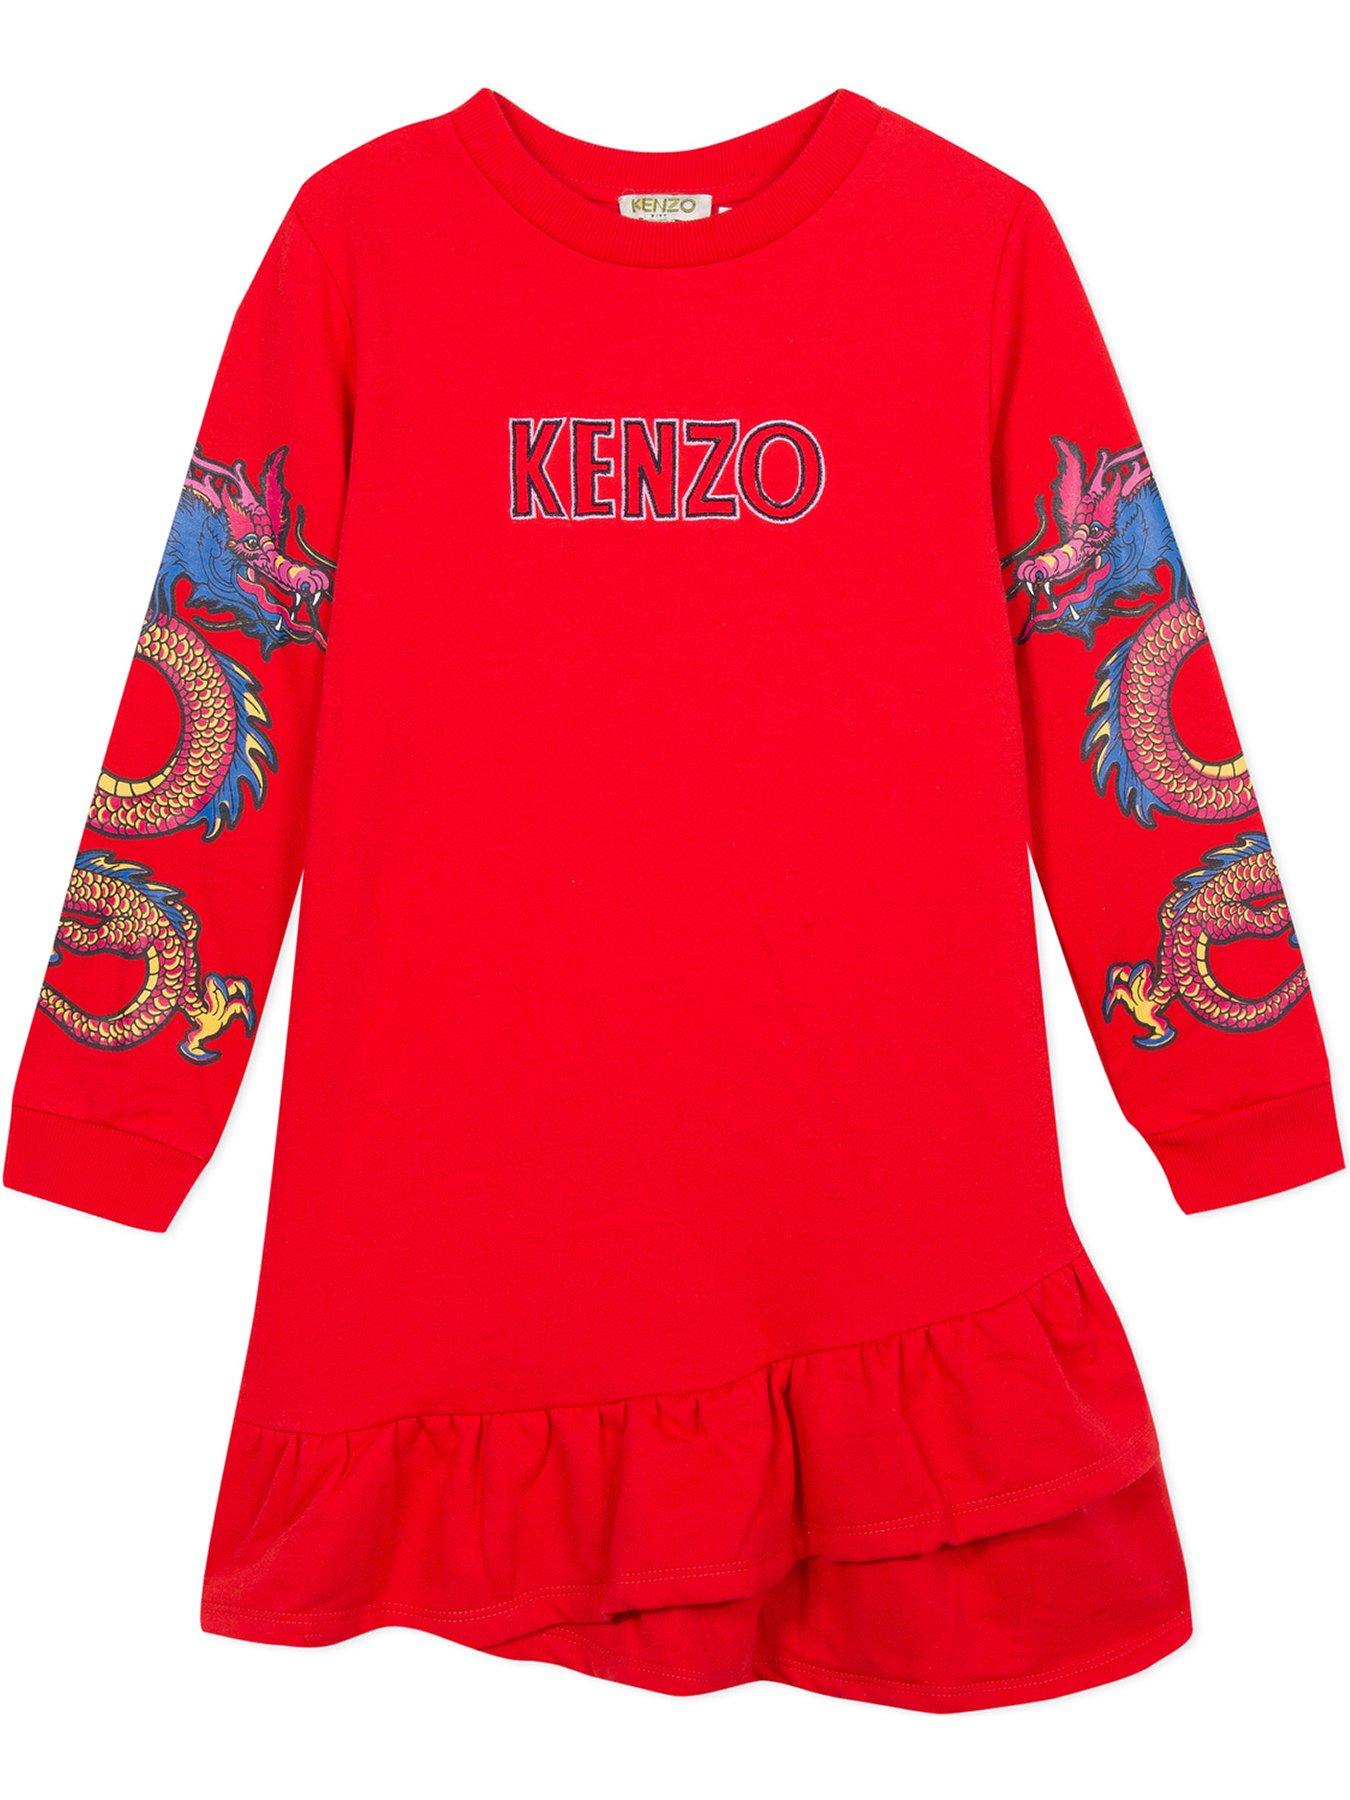 kenzo girls dress